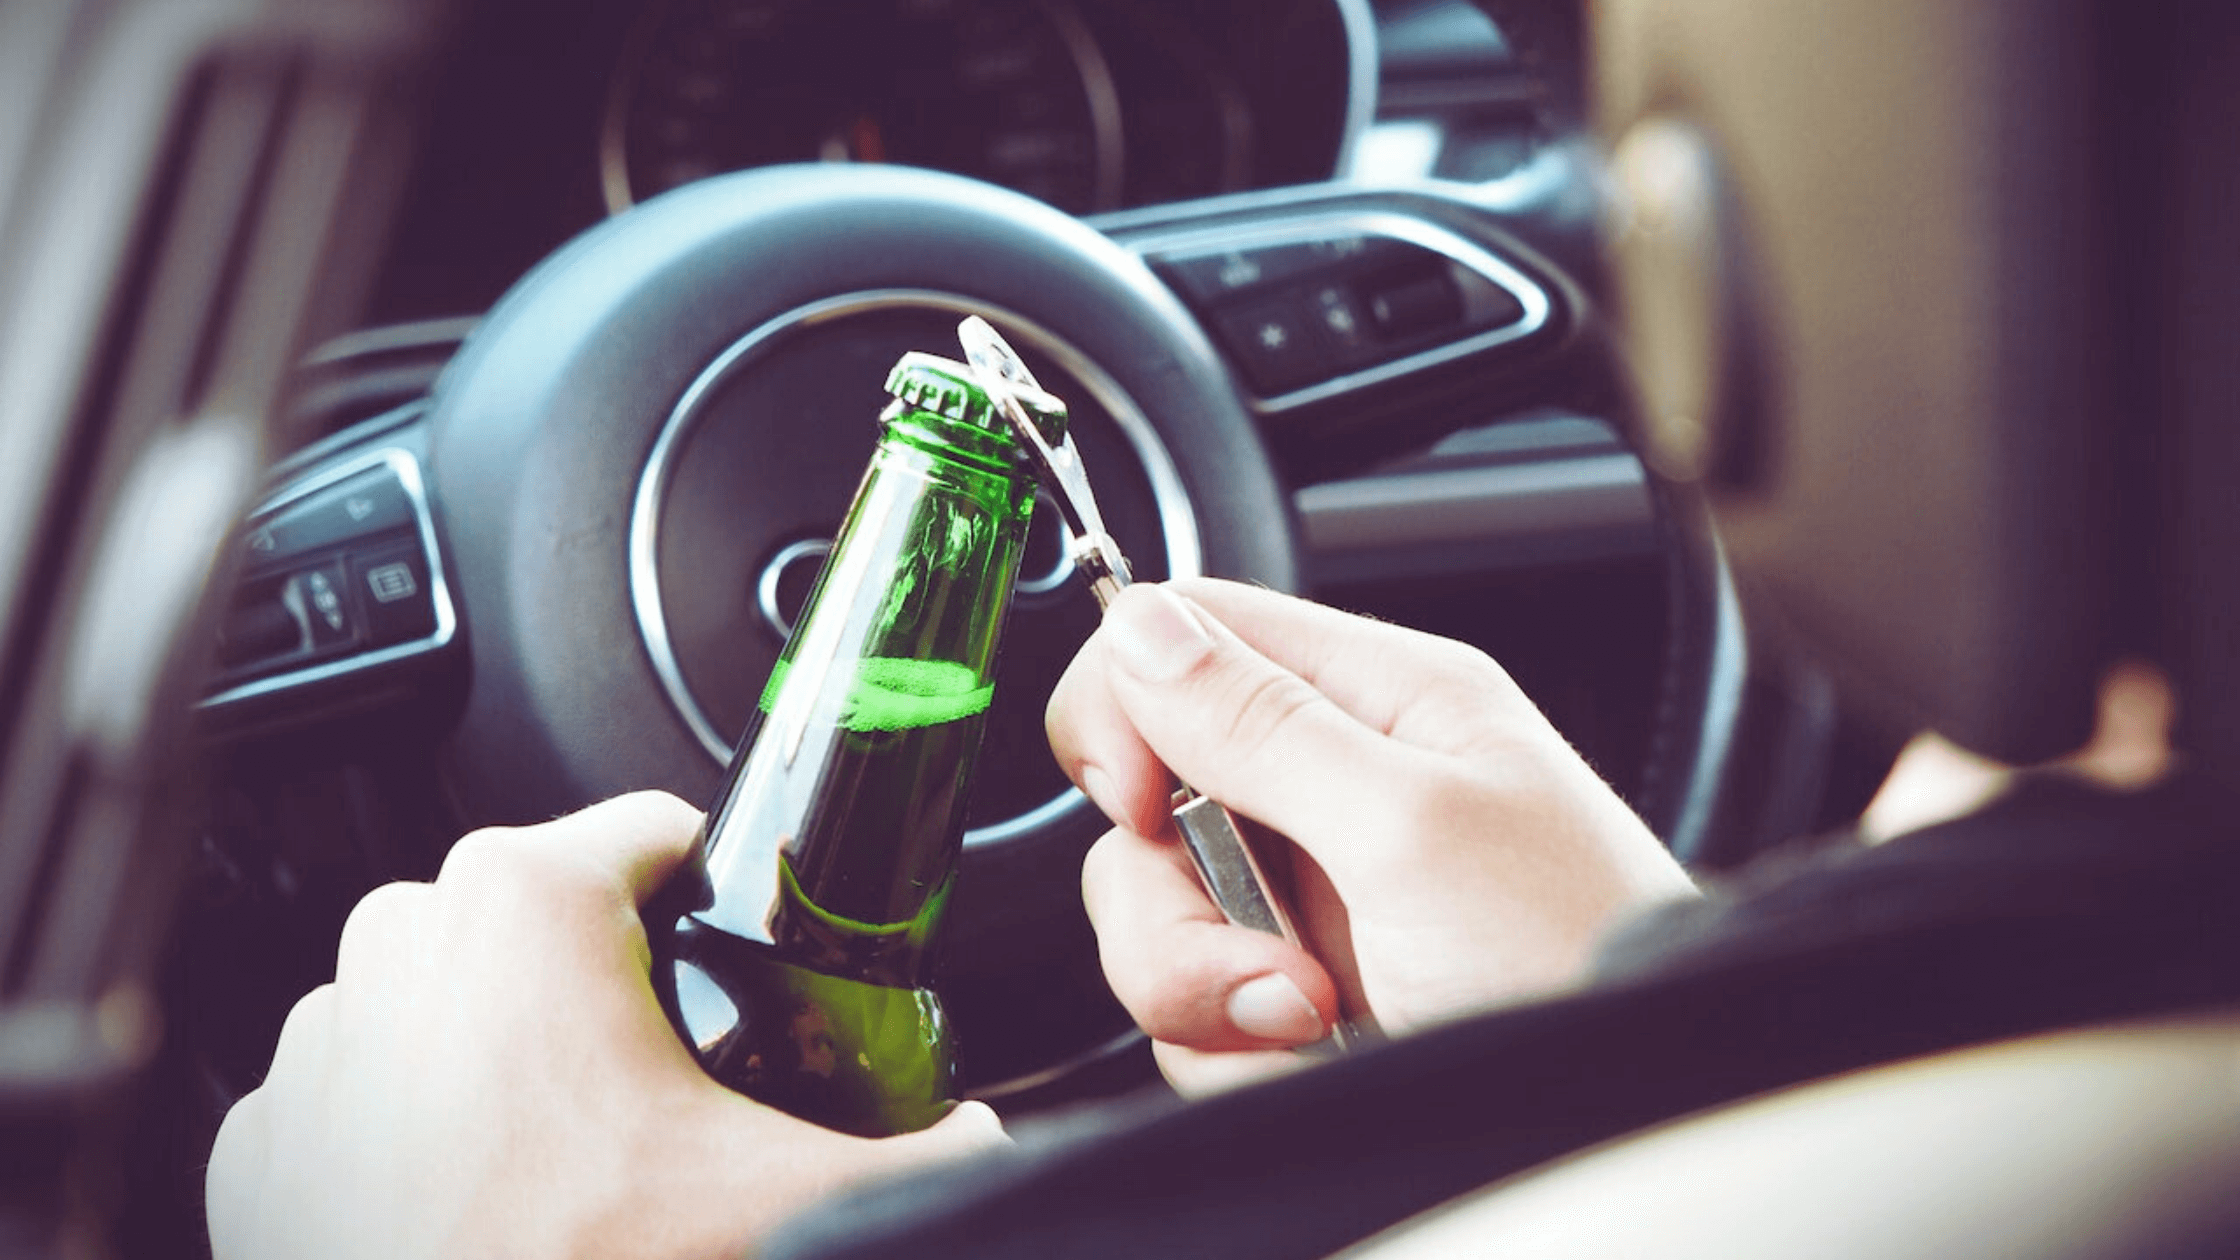 Person opening beer bottle in car, potential drunk driving danger.